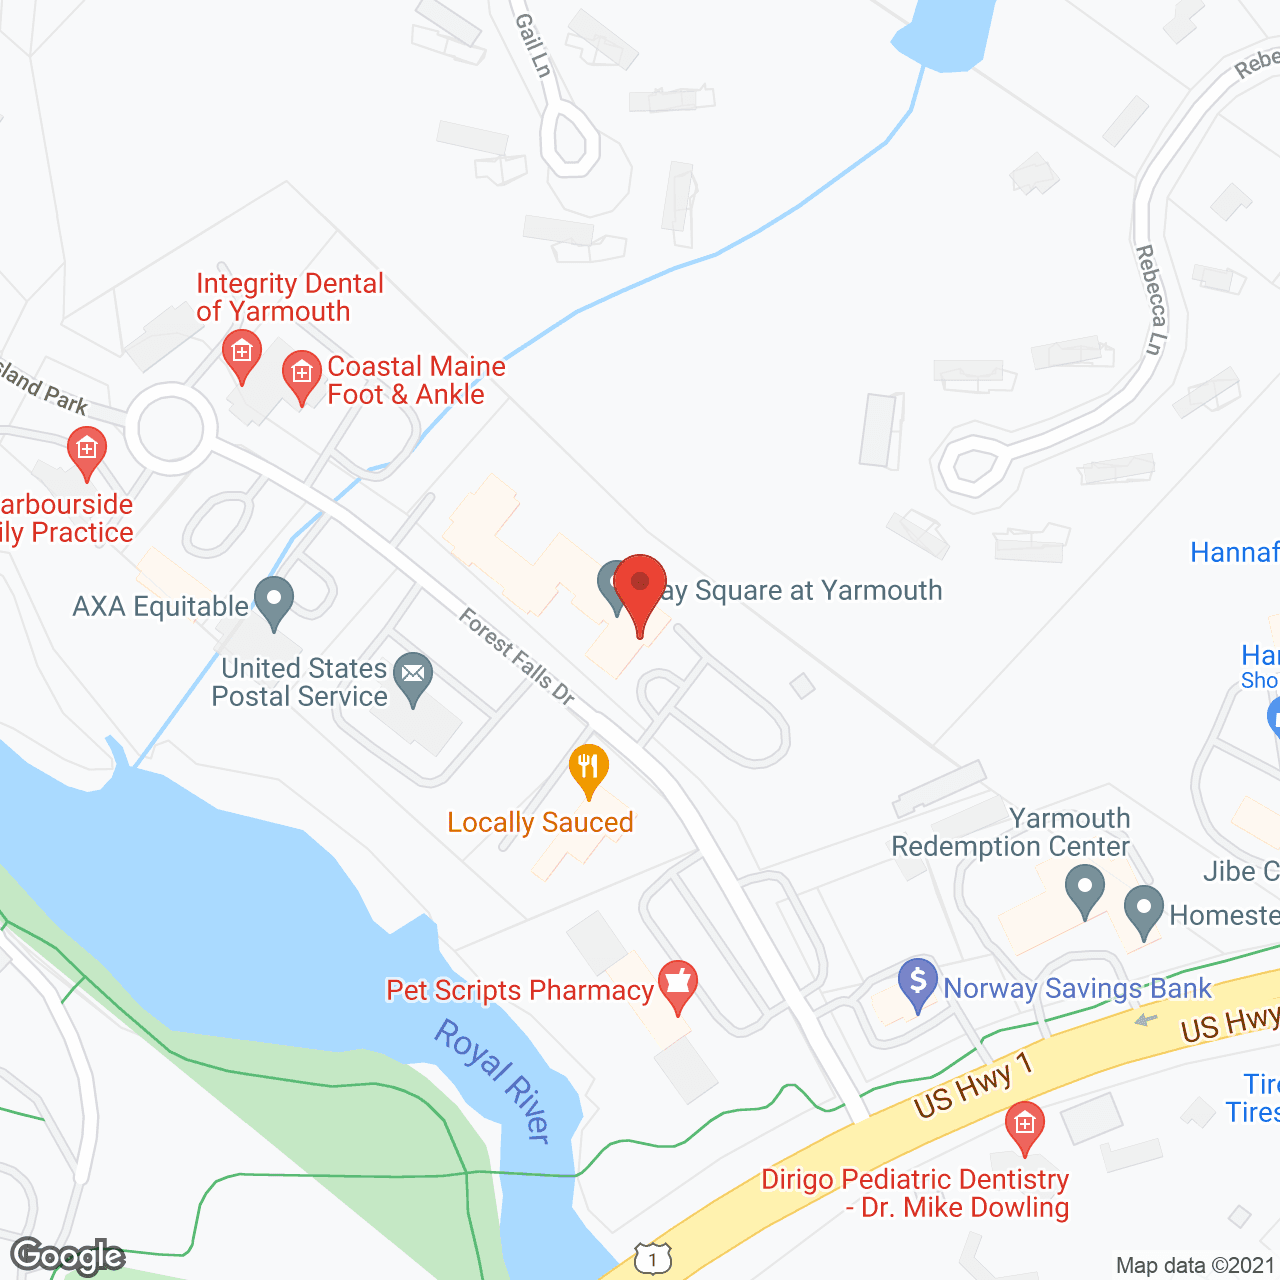 Bay Square at Yarmouth in google map